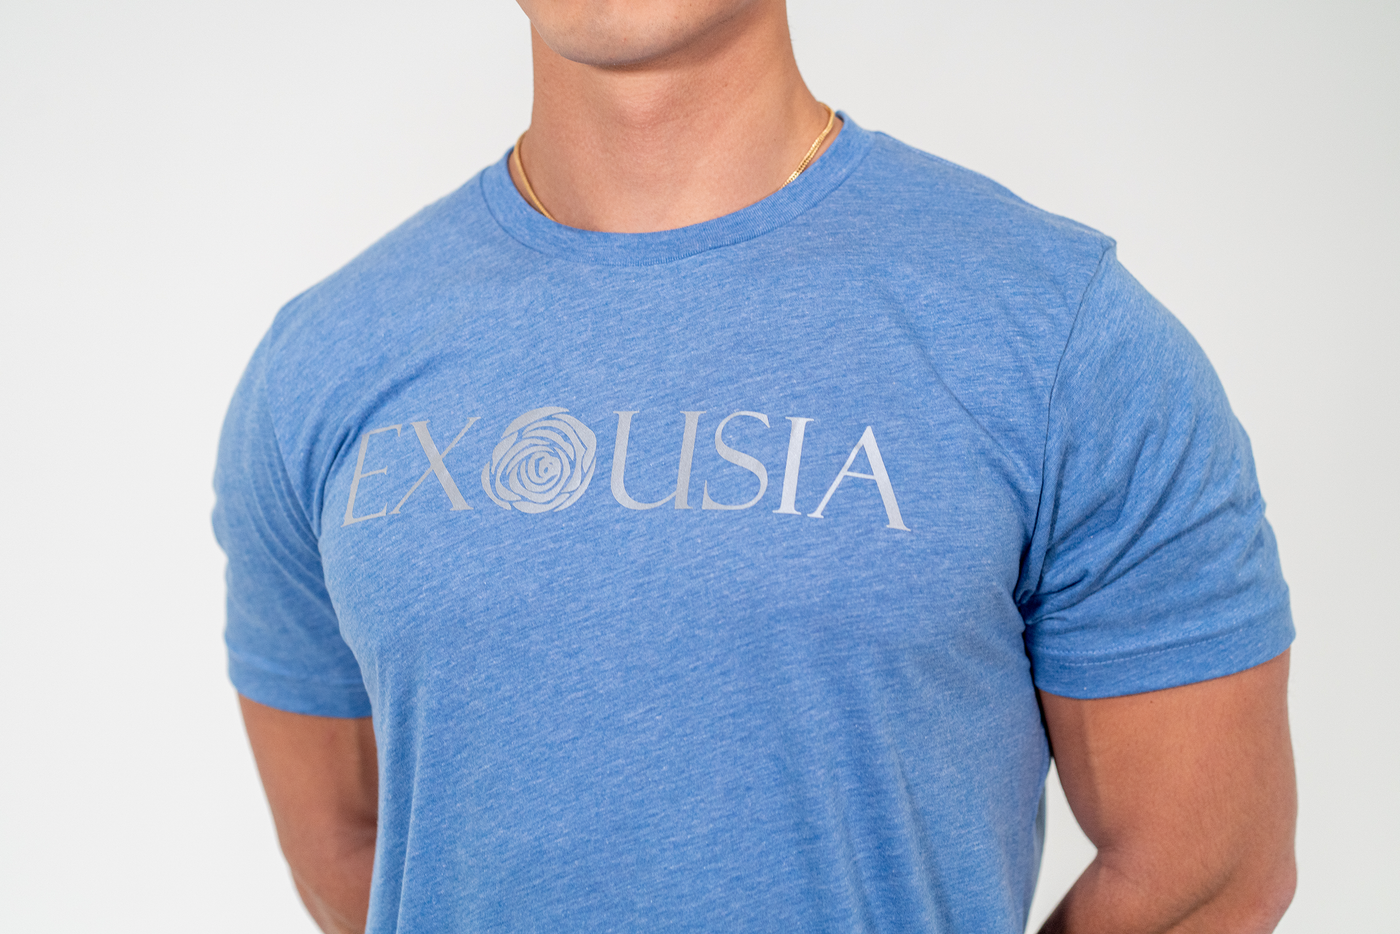 Exousia Tri-Blend Performance Reflective Shirt Blue